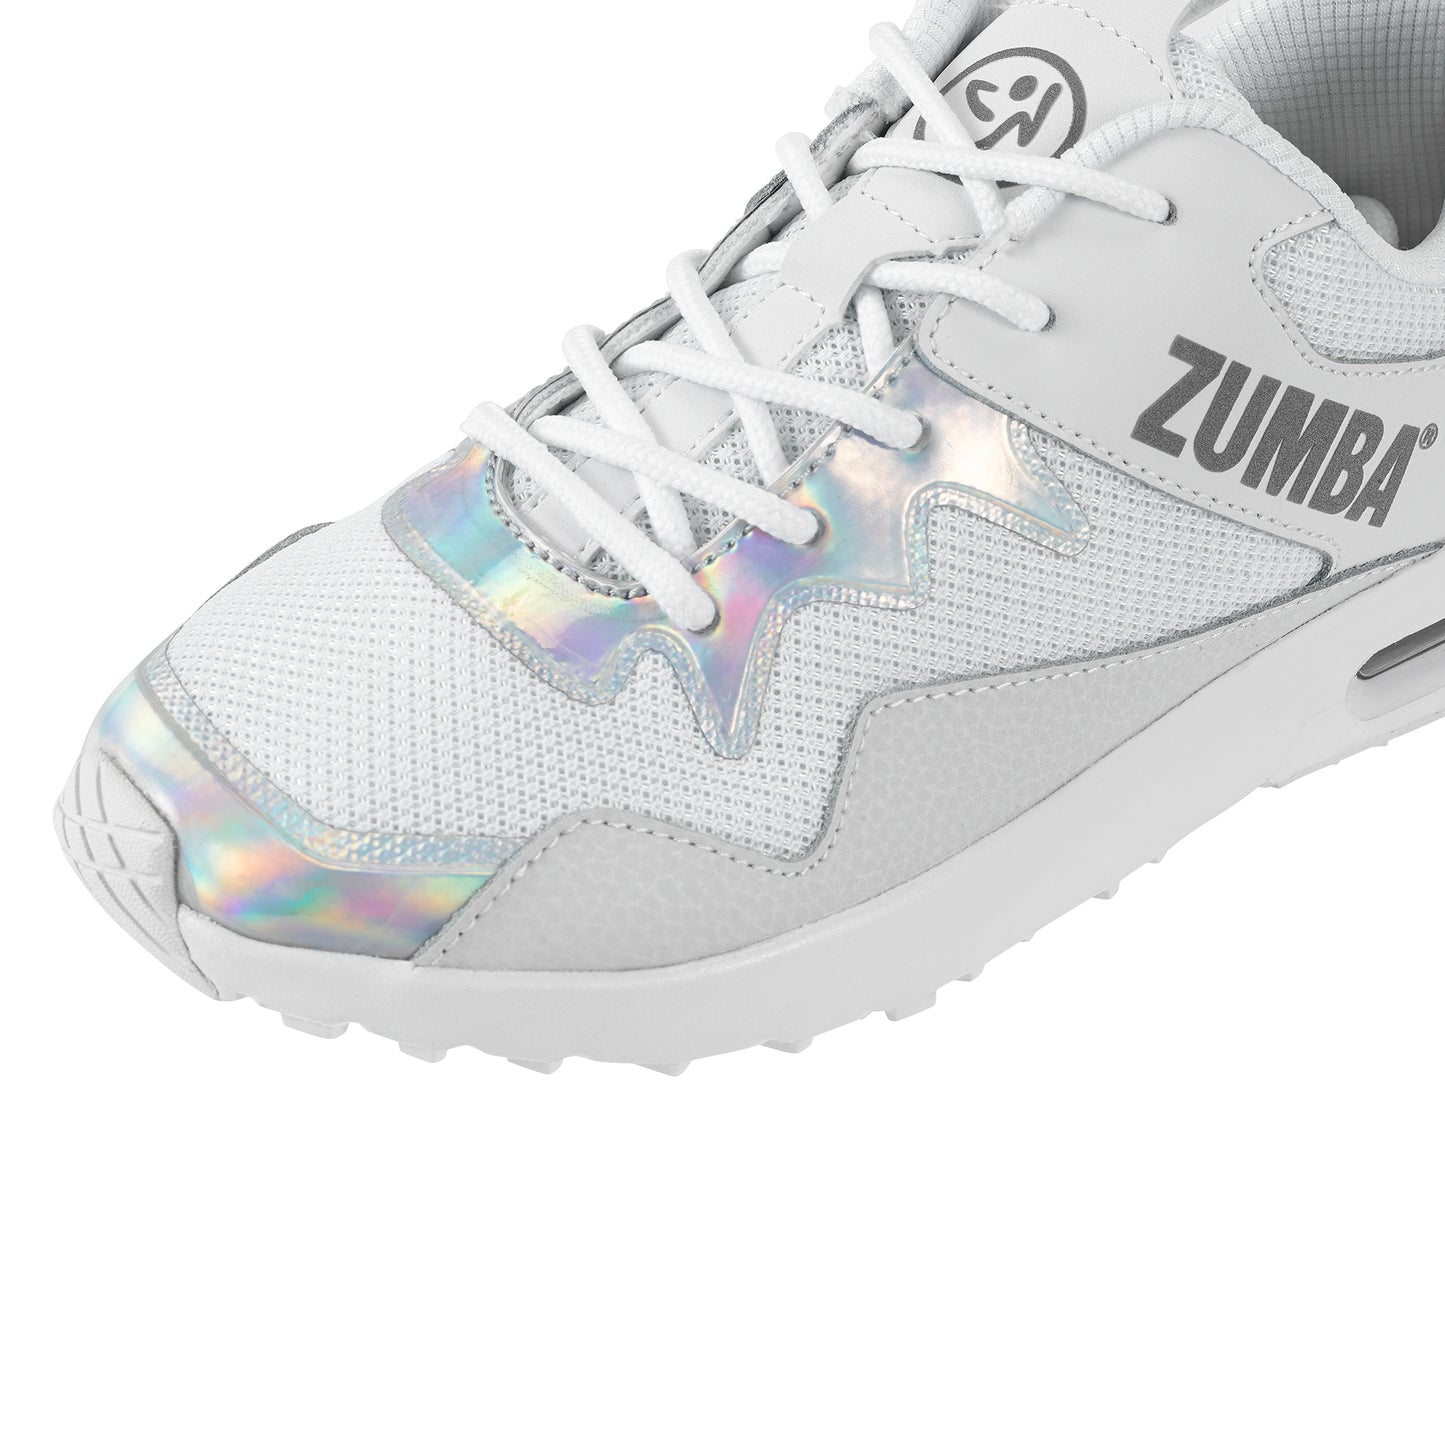 Zumba Air Classic - สีขาว